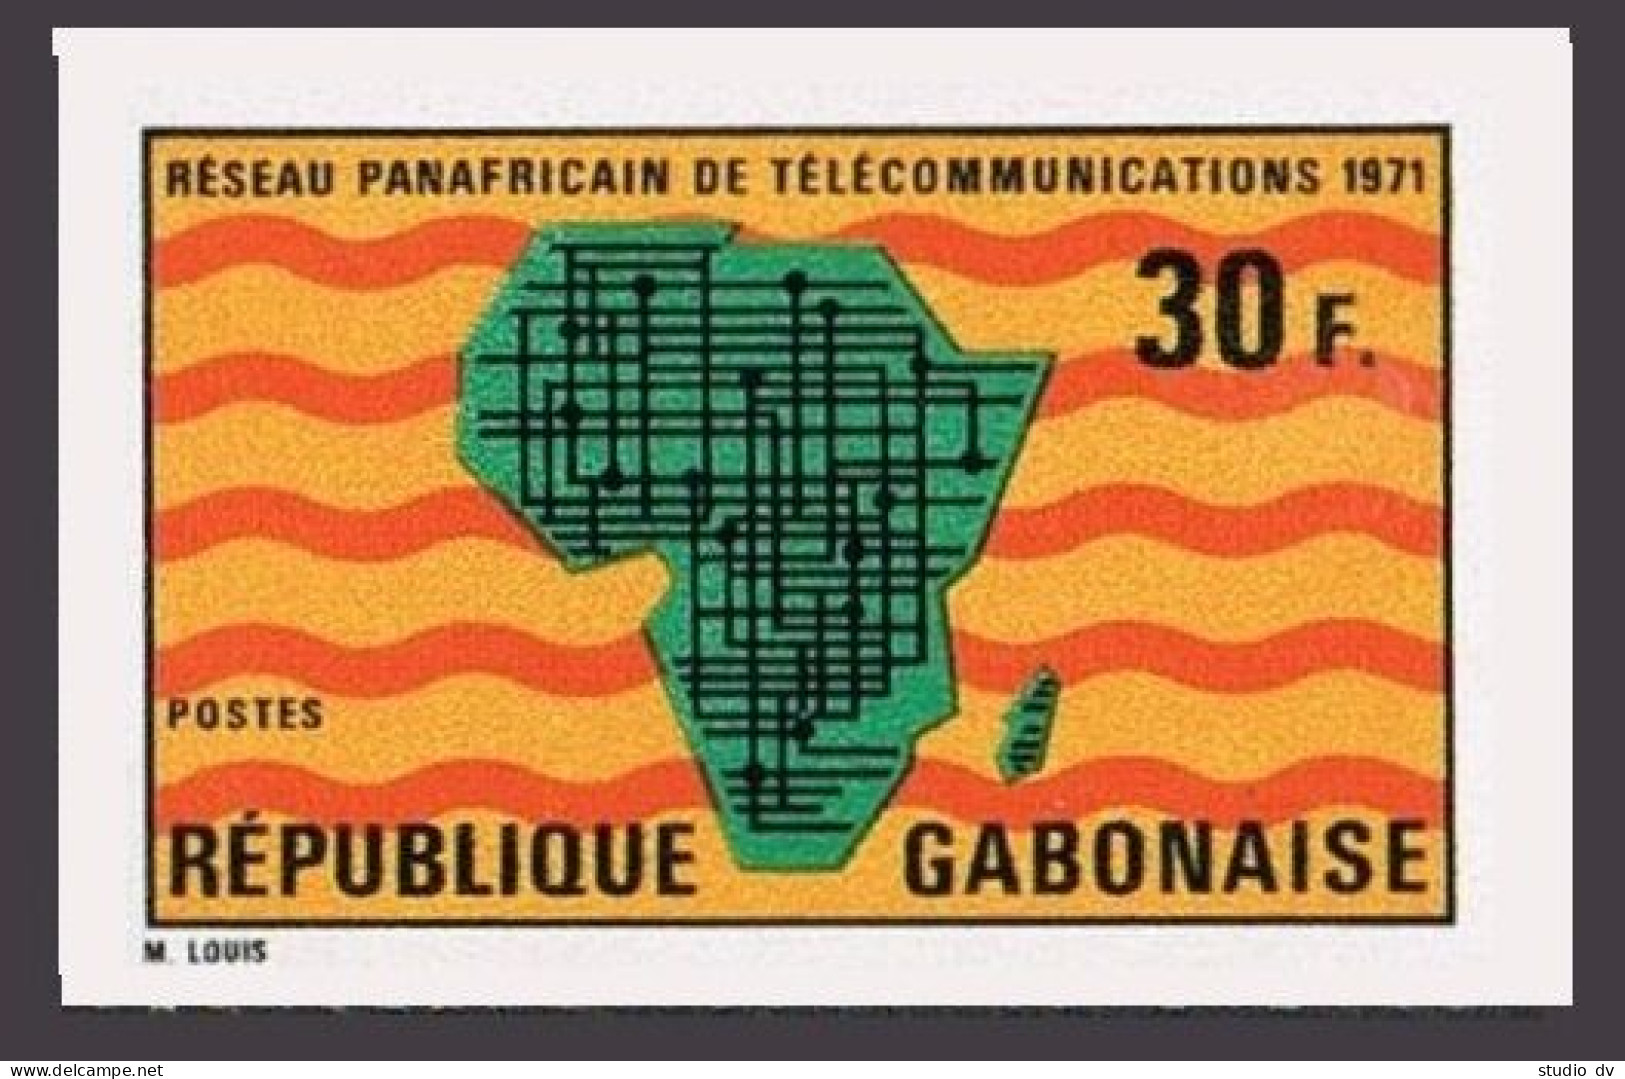 Gabon 271 Imperf,MNH.Michel 424B. African Telecommunication System,1971.Map. - Gabon (1960-...)